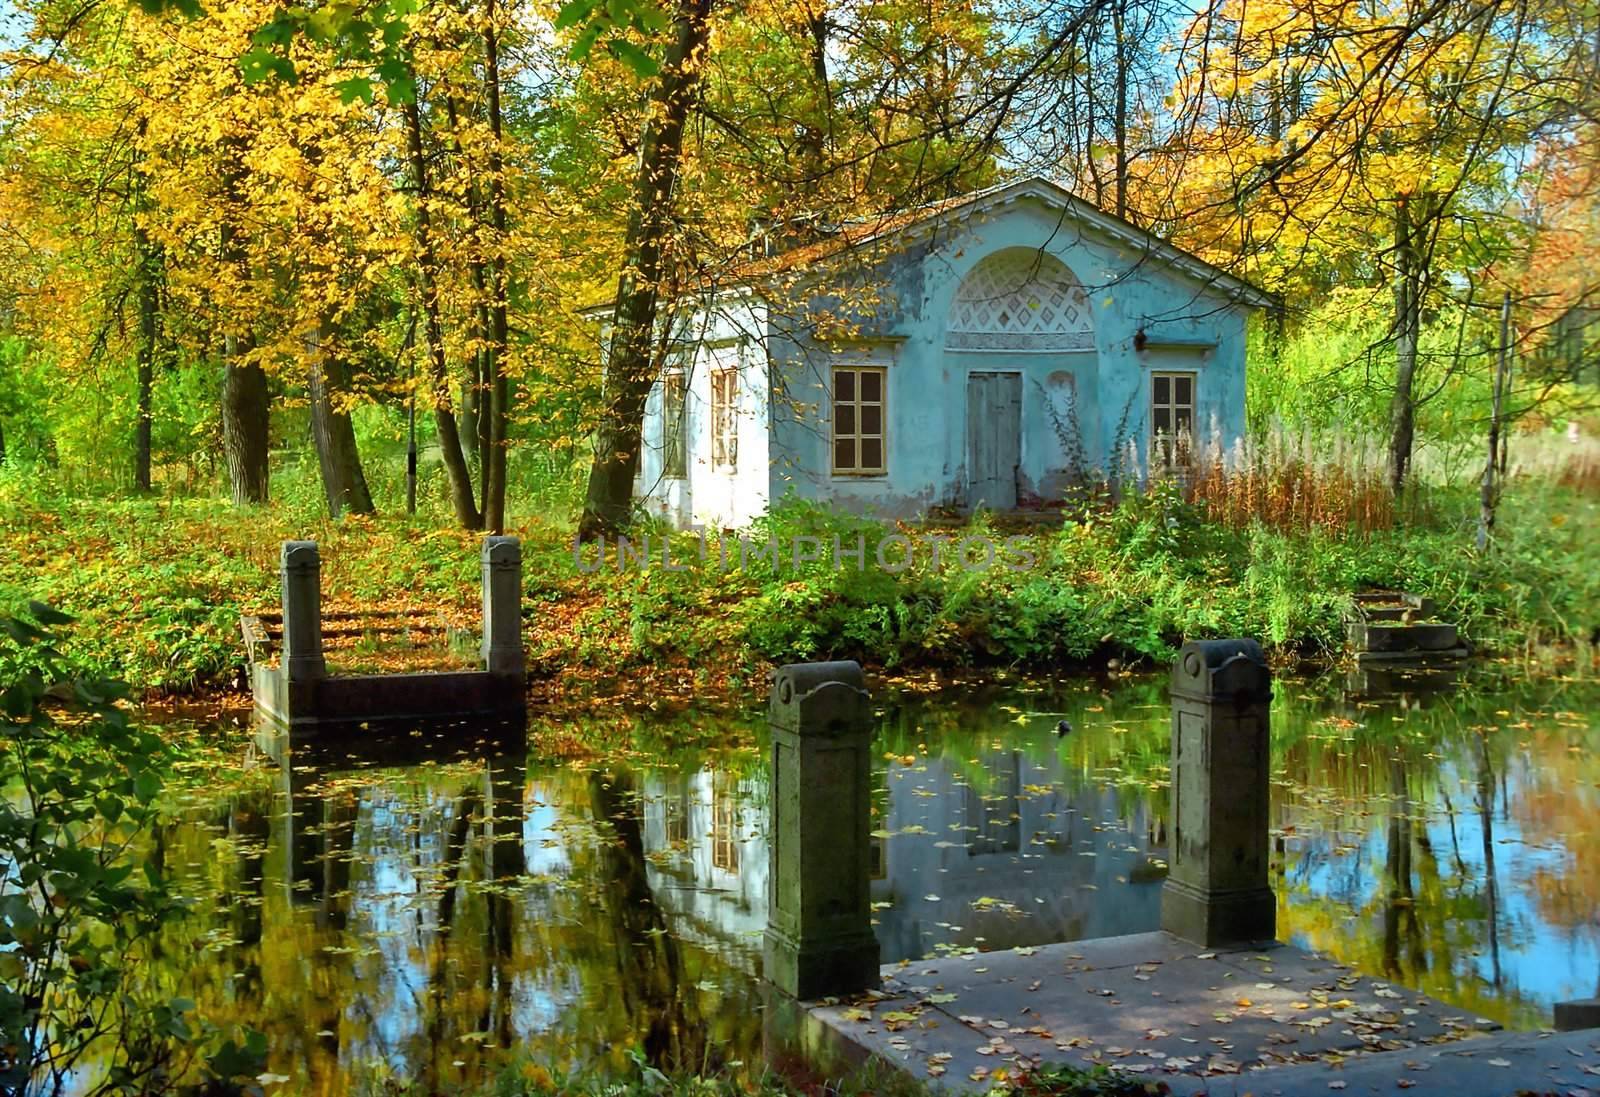 Romantic place in the autumn park